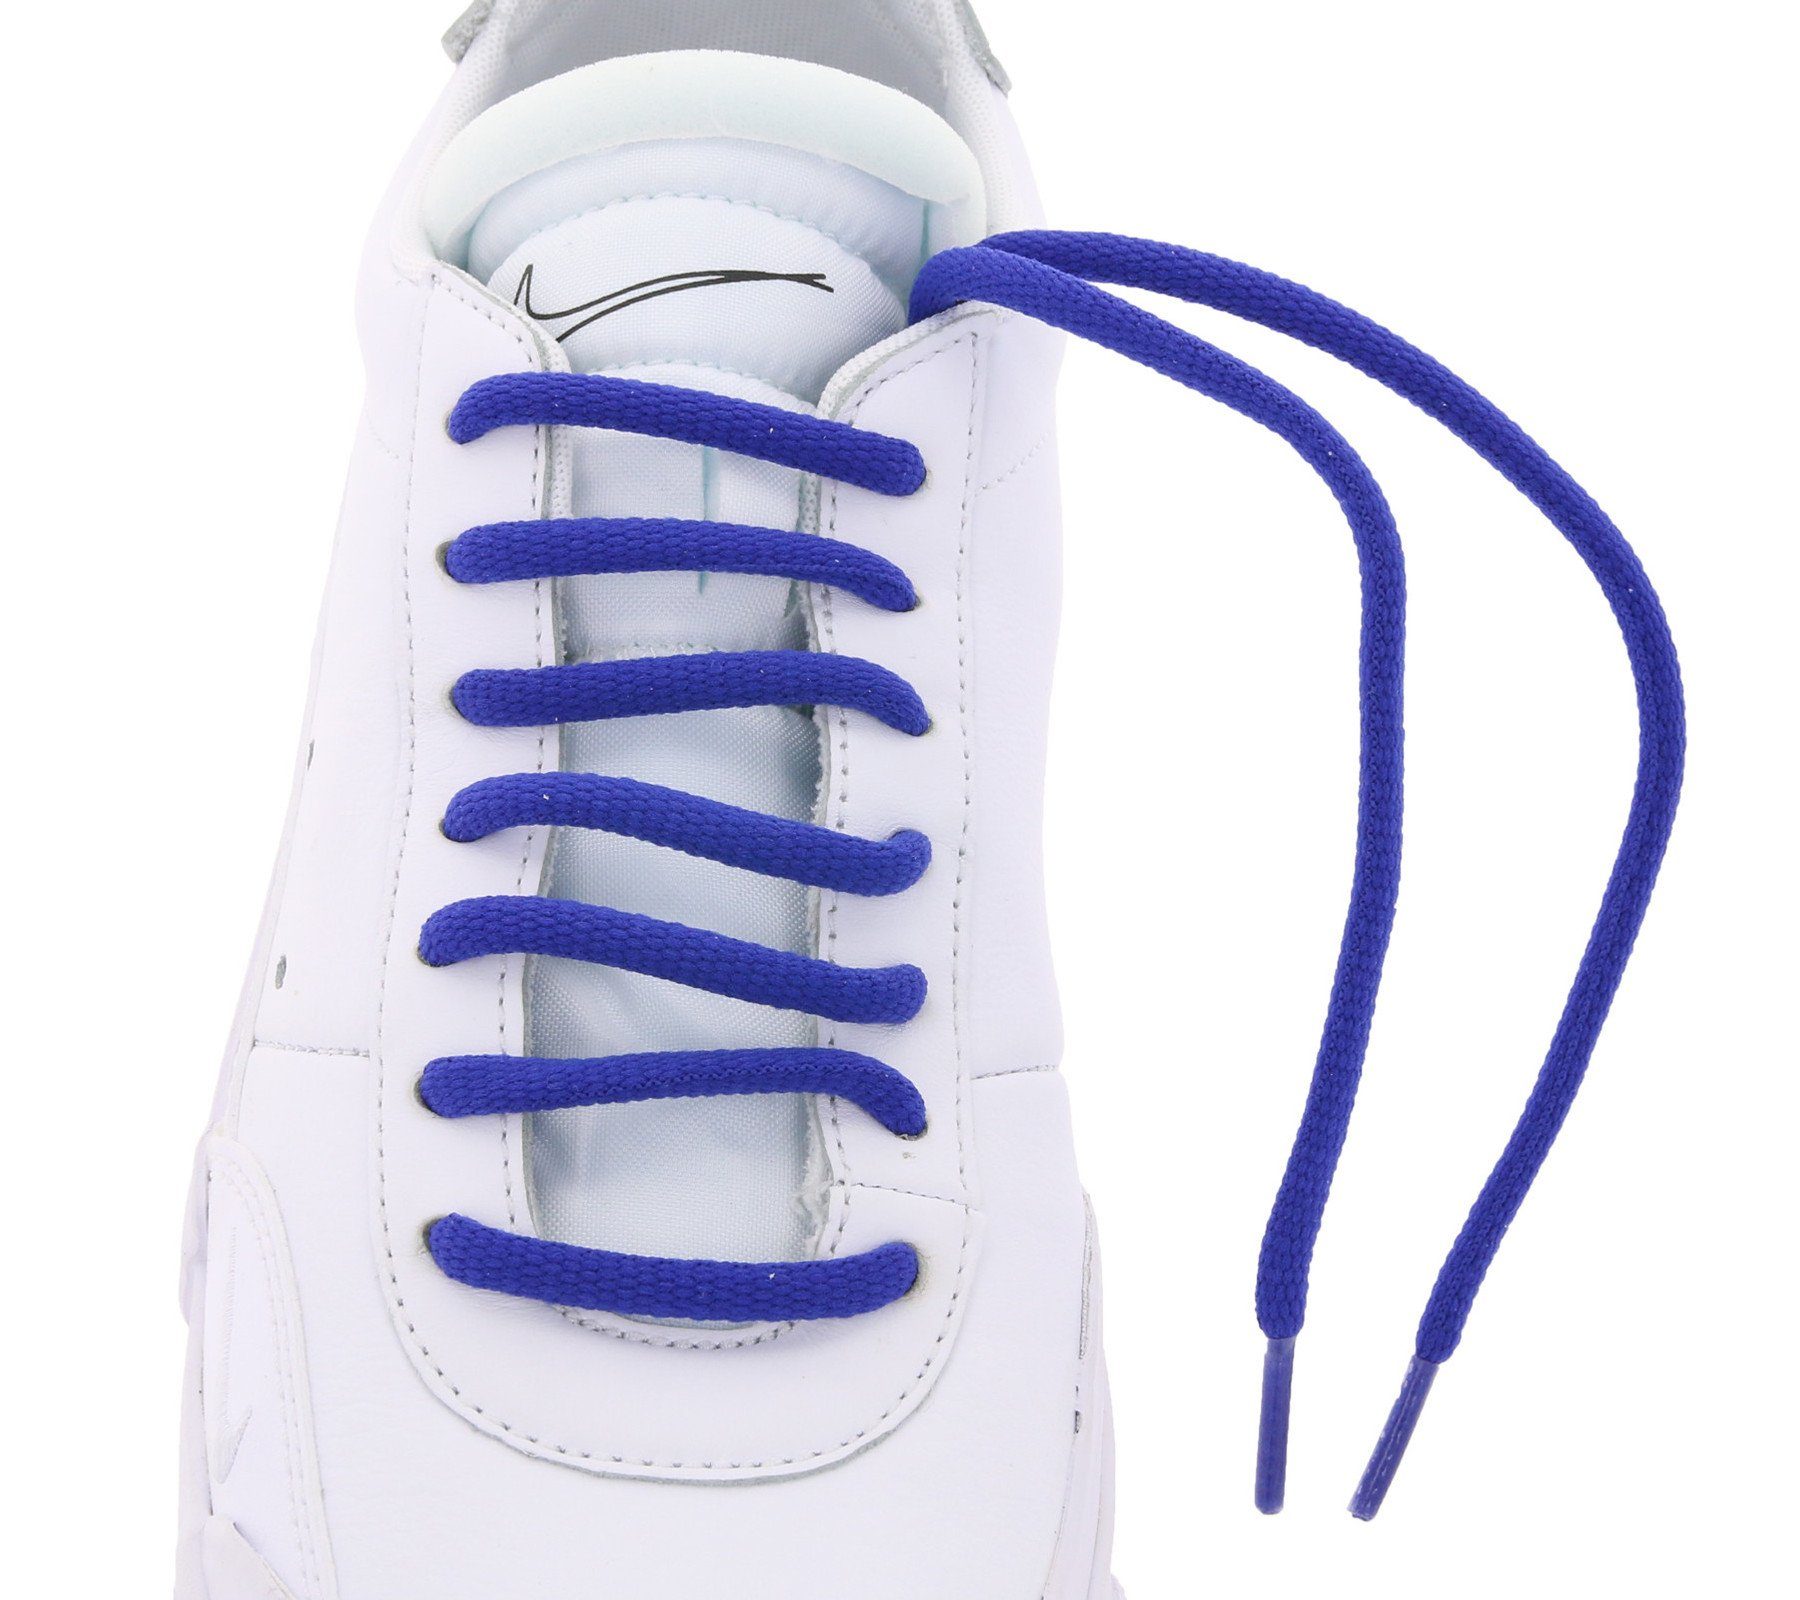 Dunkeblau angesagte TubeLaces top Schuhe Schnürsenkel Schnürsenkel Schuhband Schnürbänder Tubelaces